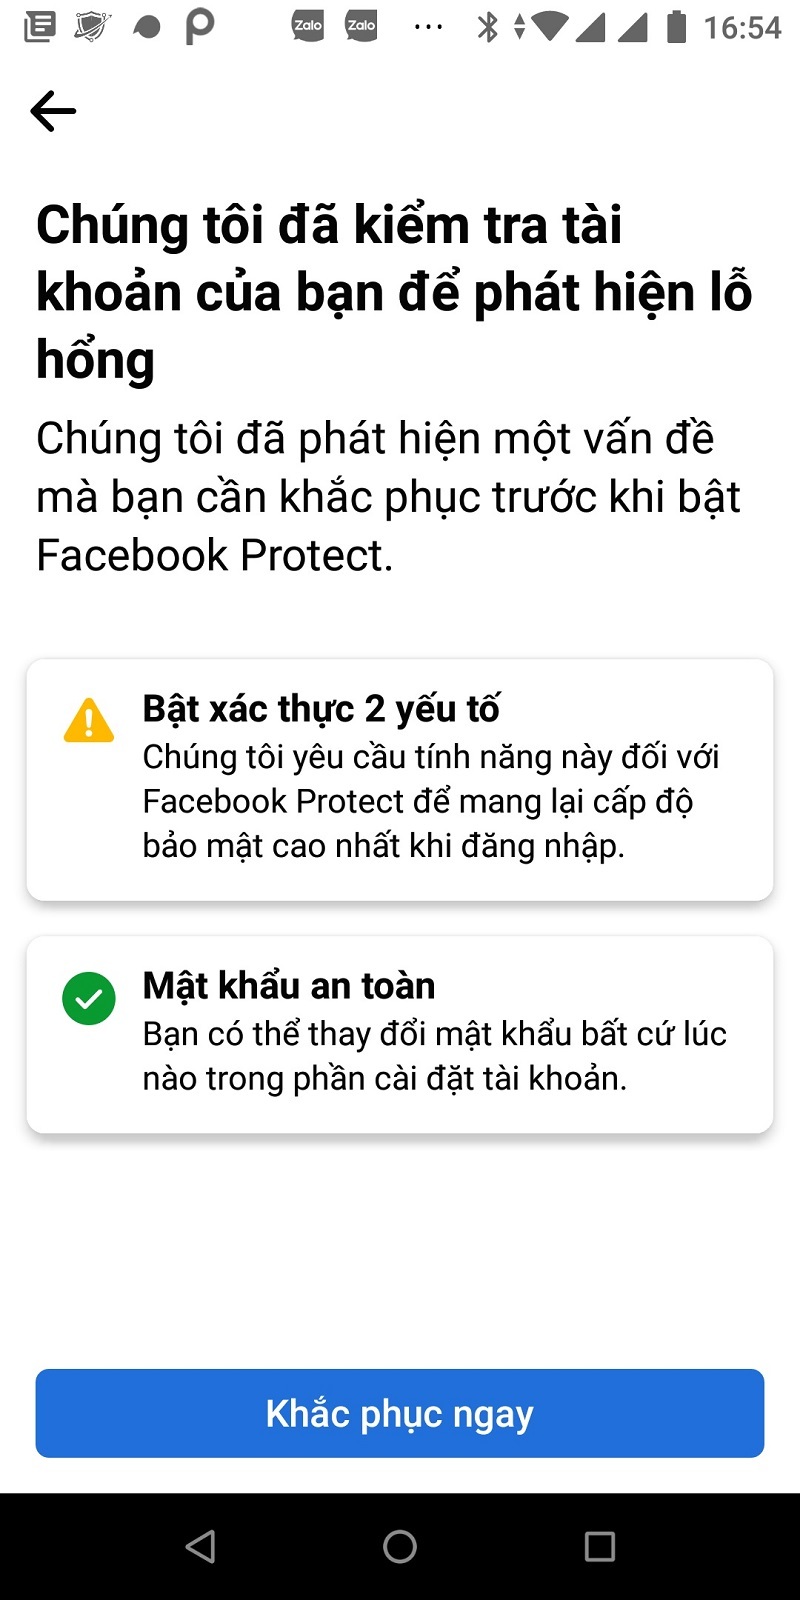 Hướng dẫn bật Facebook Protect qua SMS